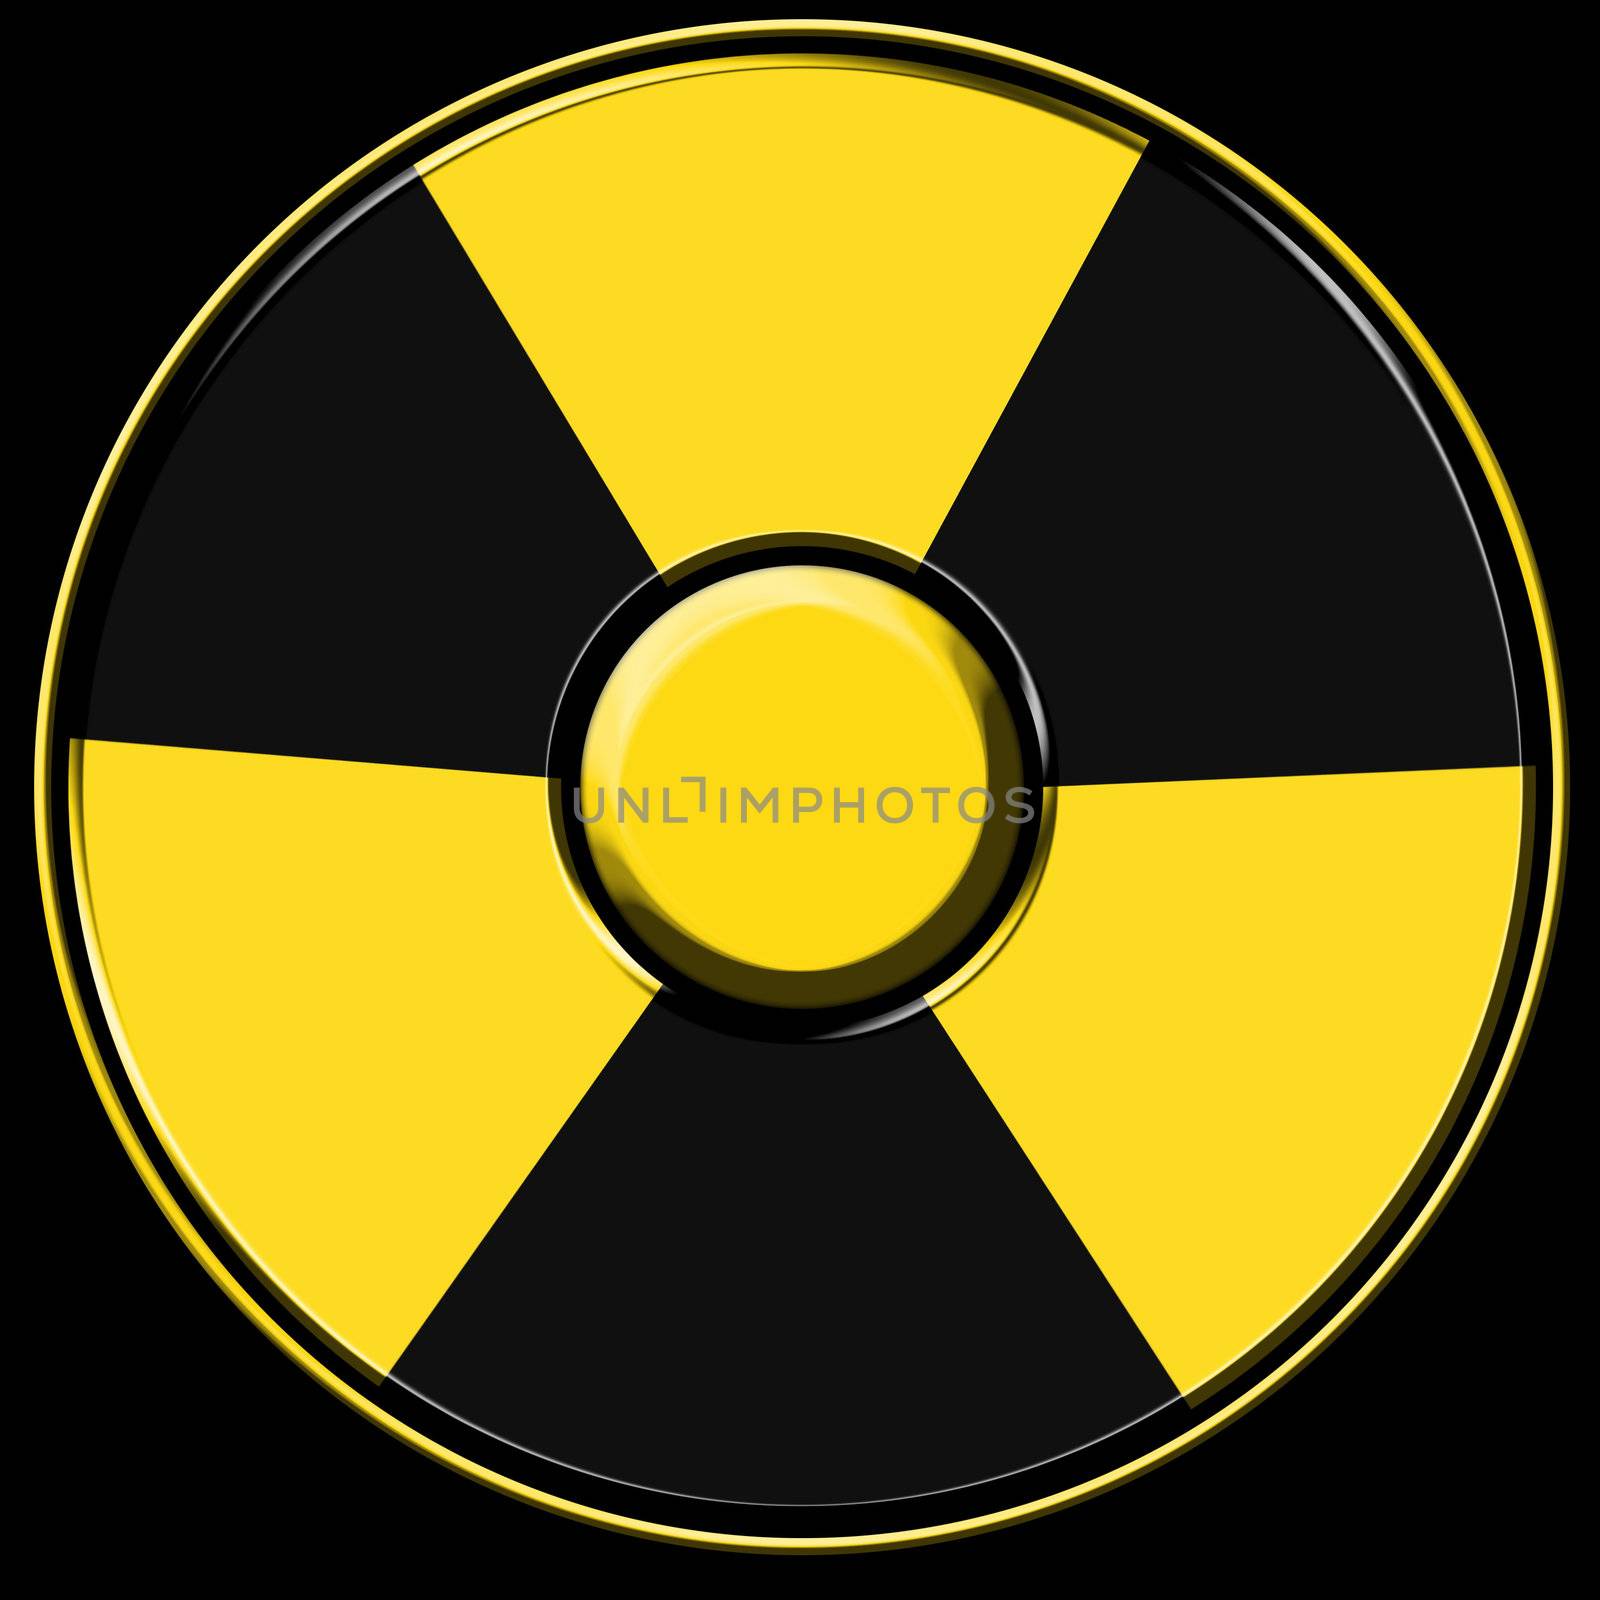 warning symbol of radiation by anobis